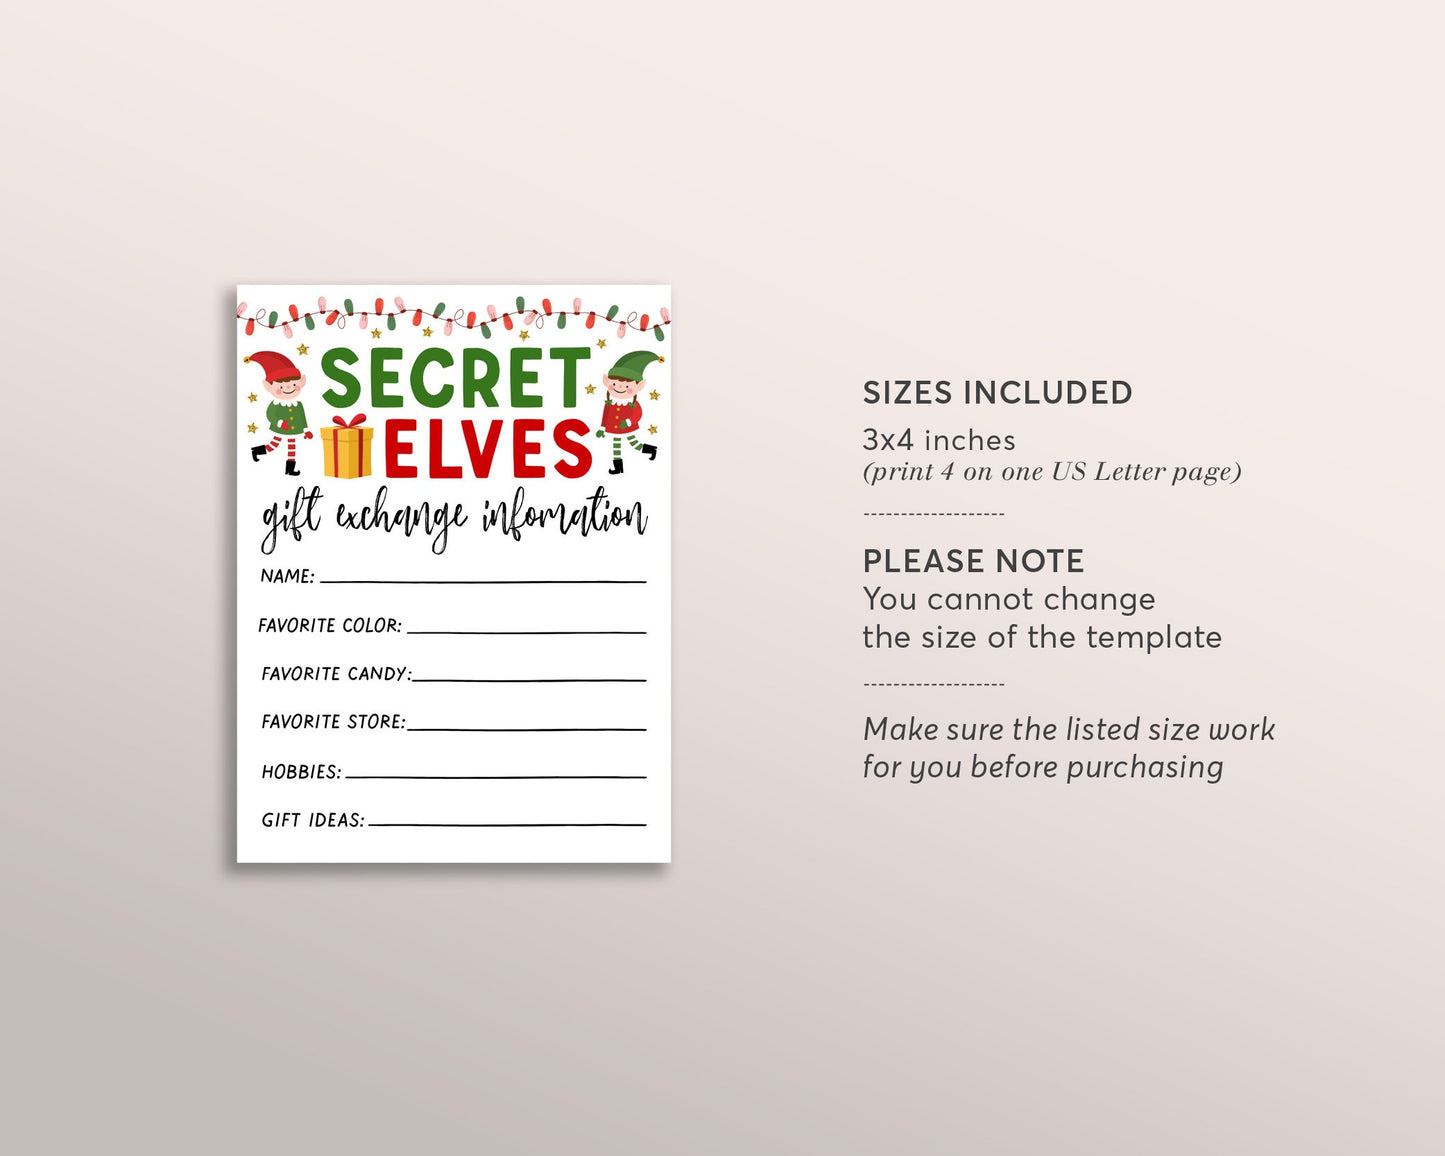 Secret Elves Gift Exchange Cards Editable Template, Secret Elf Santa Holiday Christmas Exchange Forms Questionnaire, Work Secret Santa Games